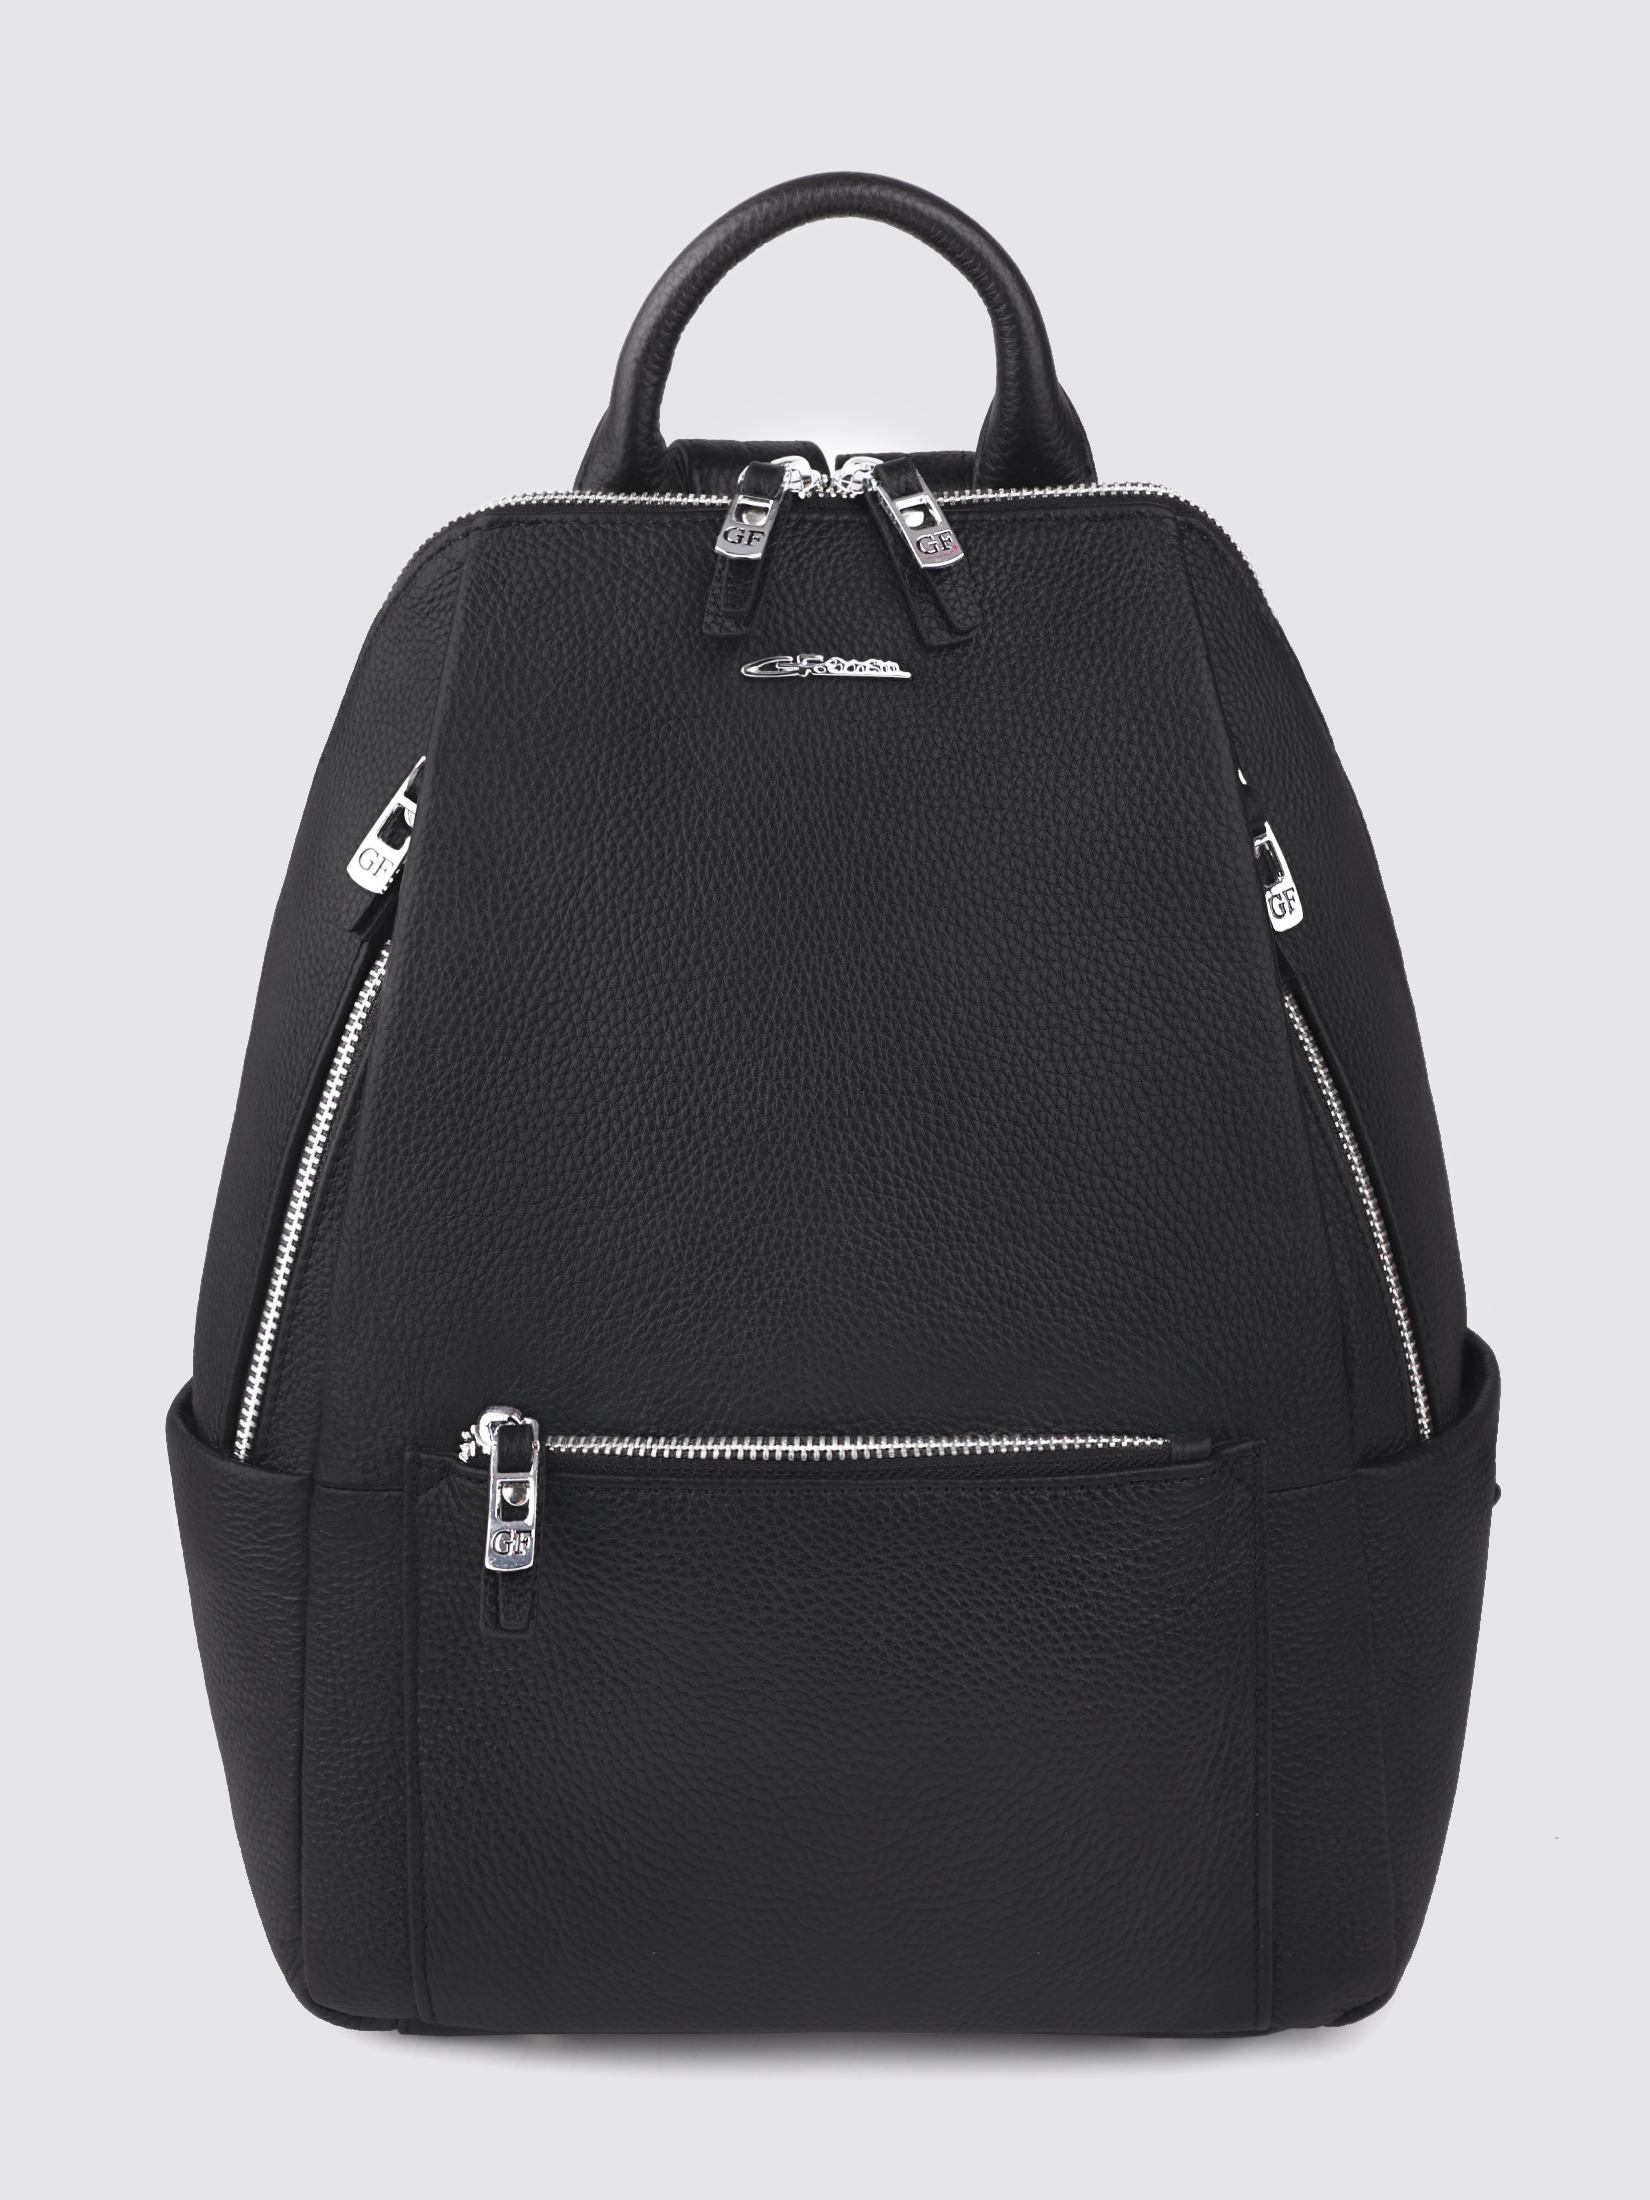 Рюкзак женский Giorgio Ferretti 2019157C F15 nero GF черный, 35х29х15 см